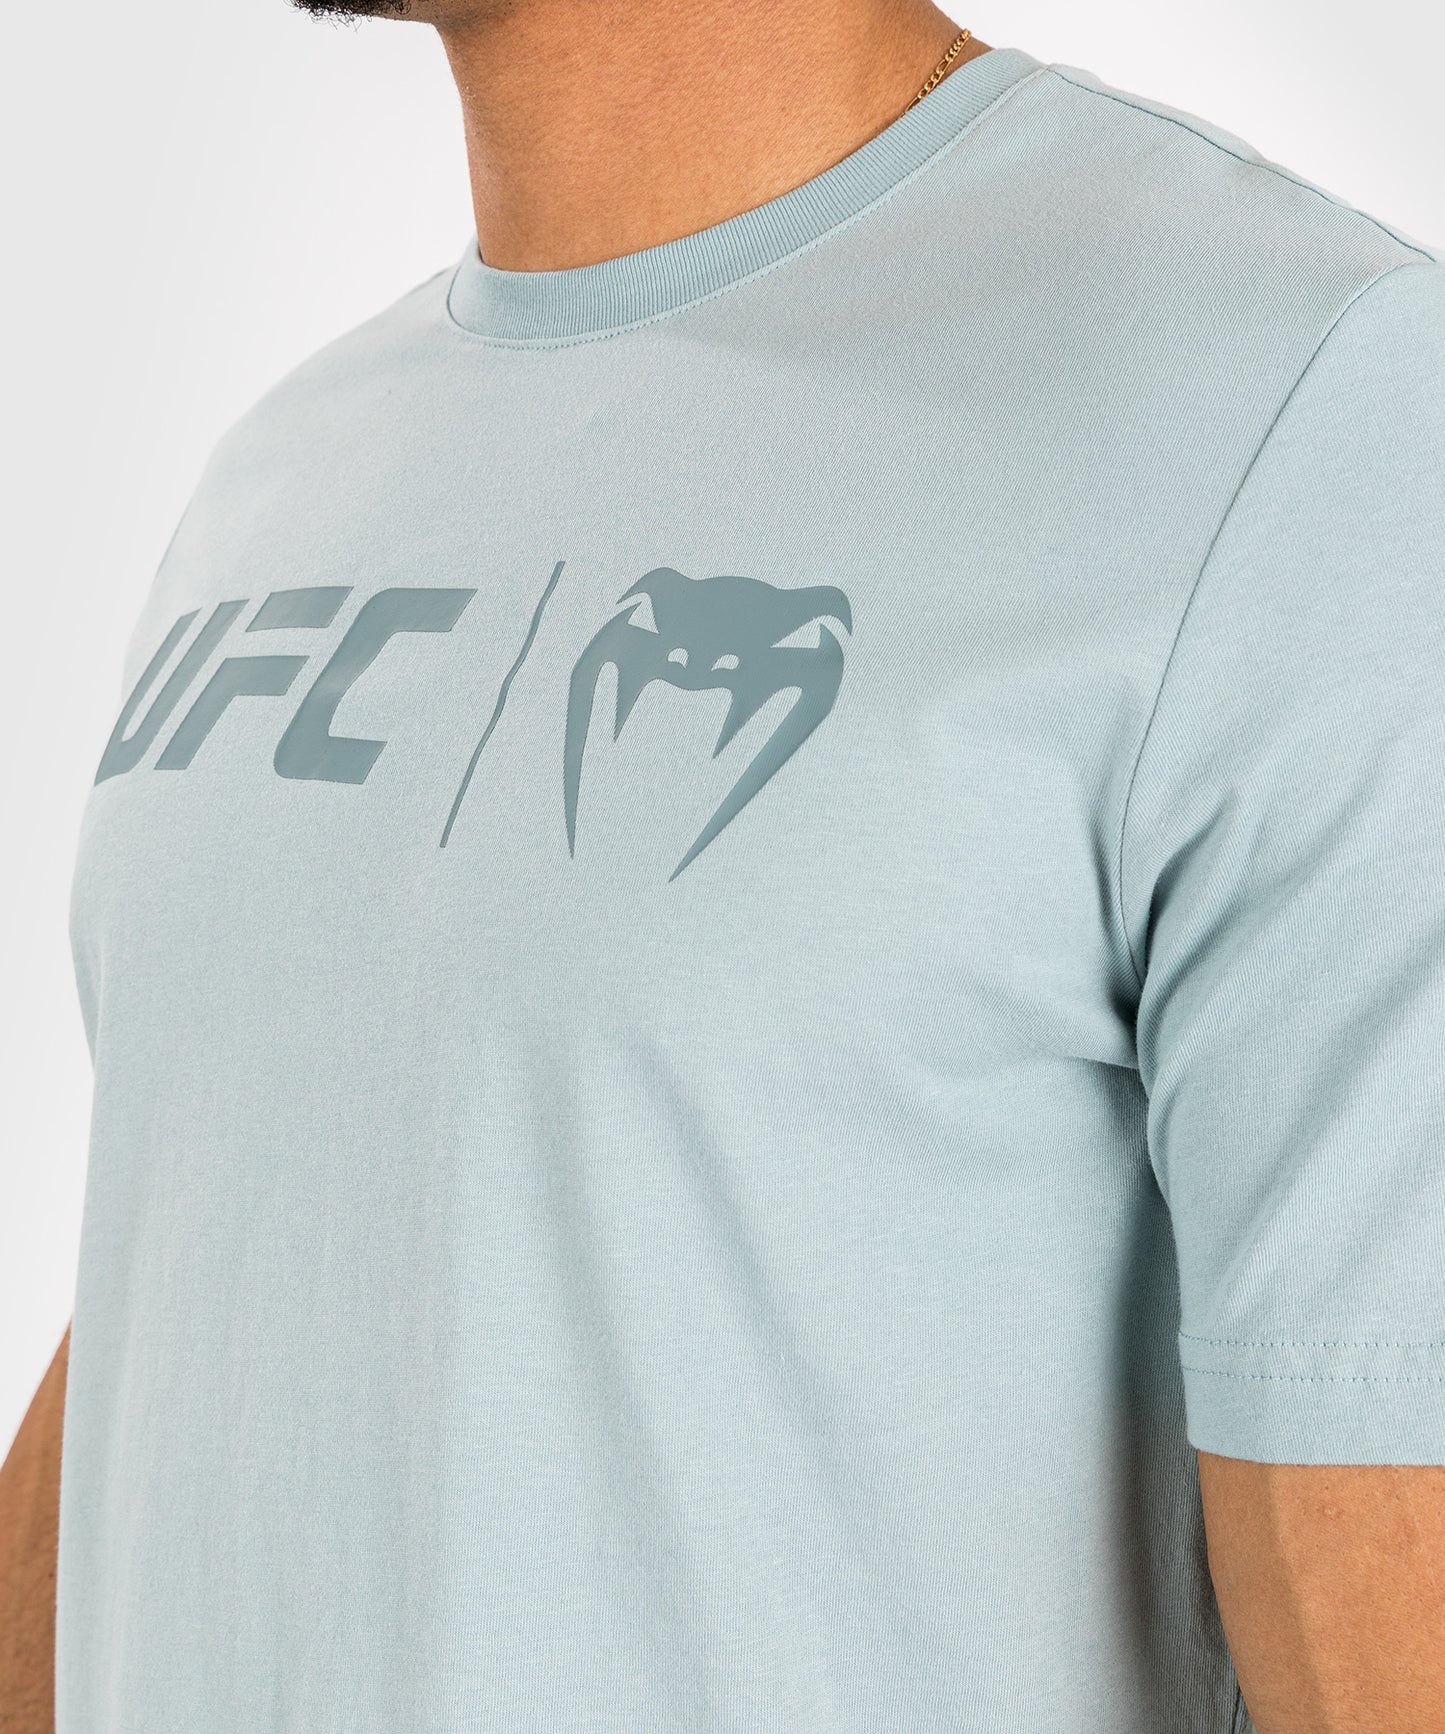 UFC Venum Classic T-Shirt - Ocean Blue